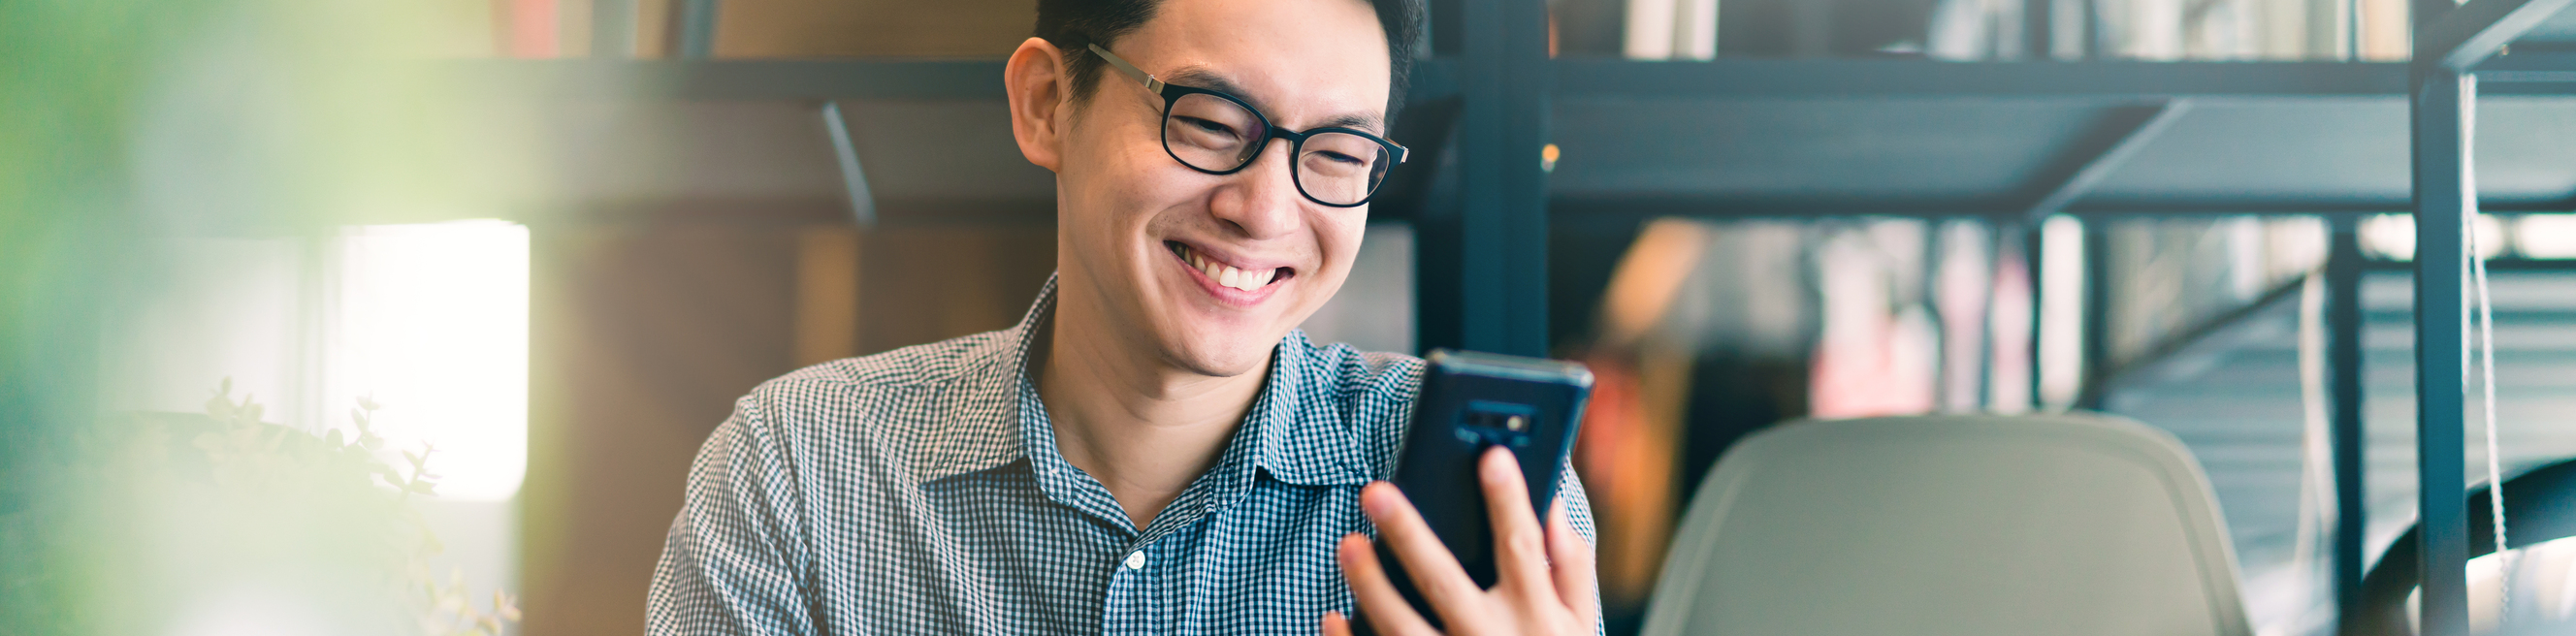 Smart confidence asian startup entrepreneur business owner businessman smile hand use smartphone woking in office background